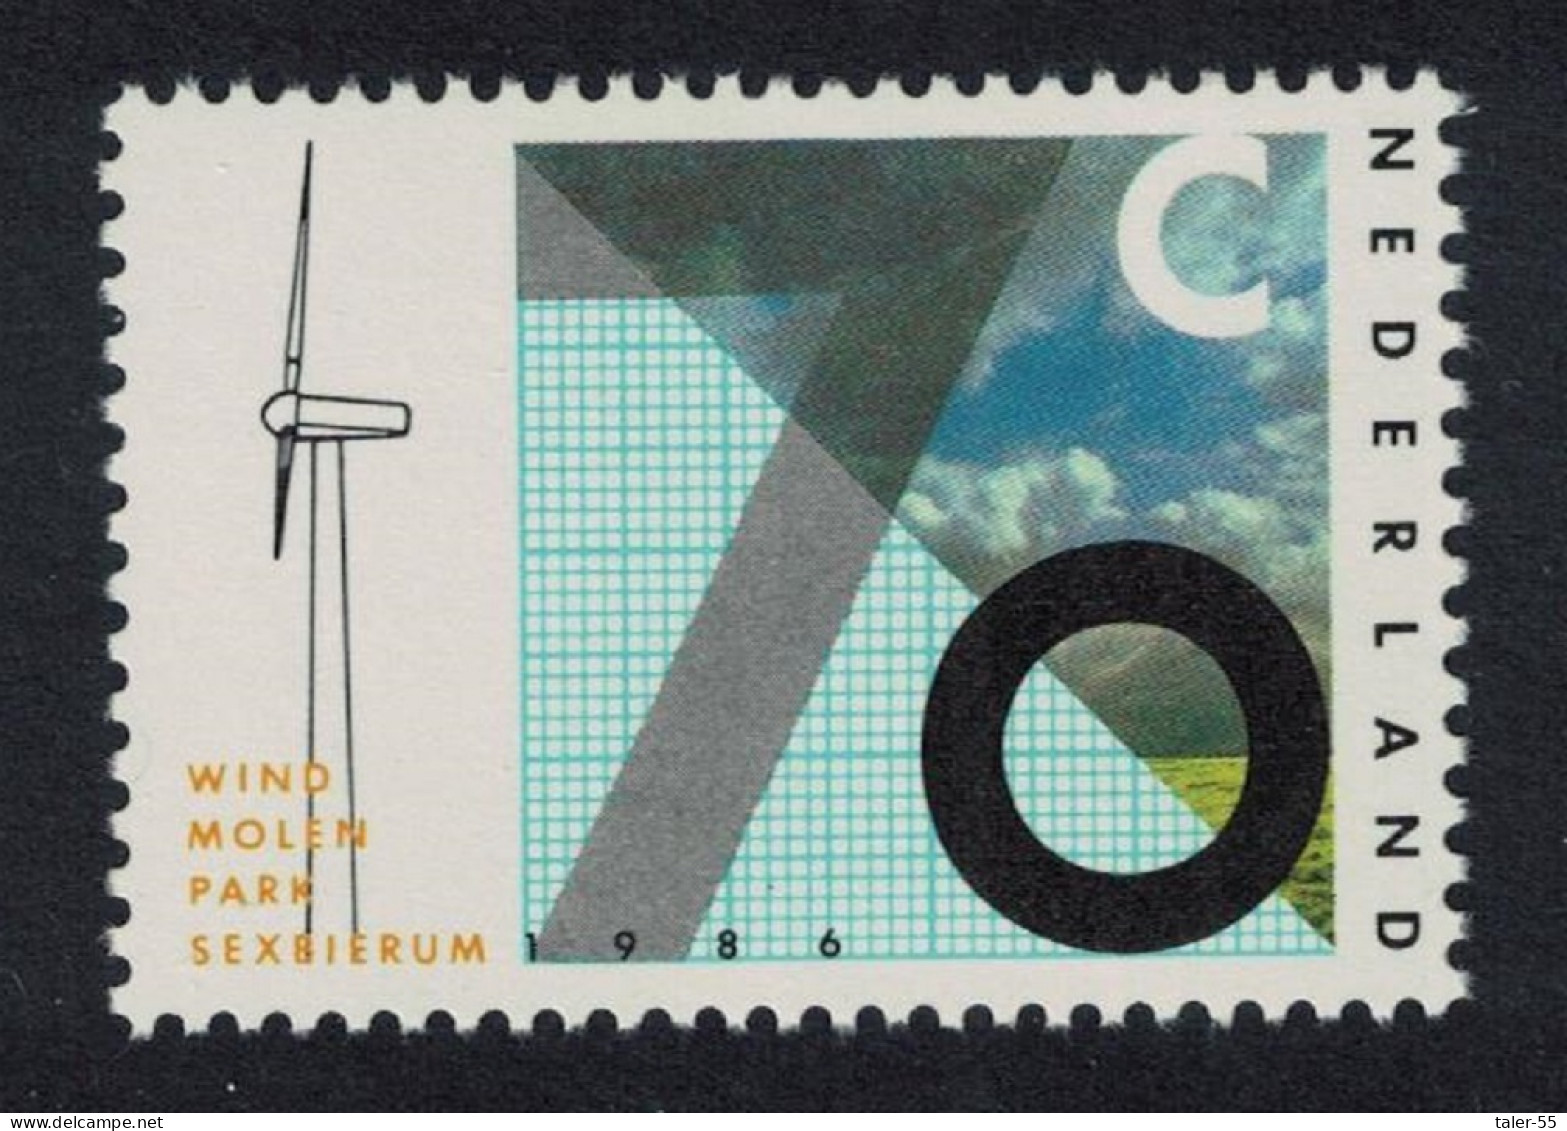 Netherlands Windmill Test Station Sexbierum 1986 MNH SG#1479 - Nuevos